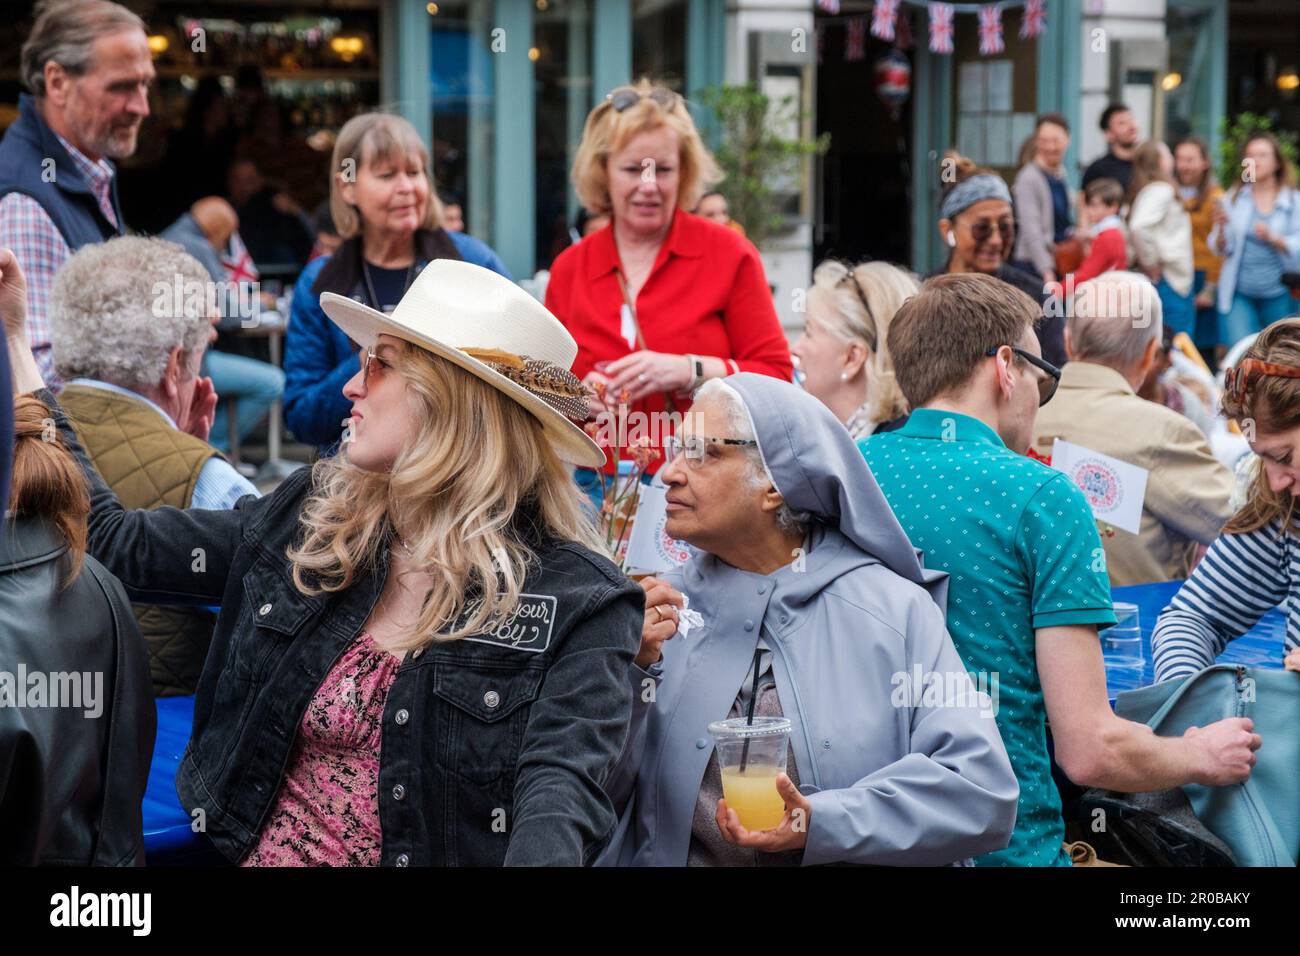 Londoners celebrate the Coronation in Style across the city Ehimetalor Unuabona/Alamy News Stock Photo